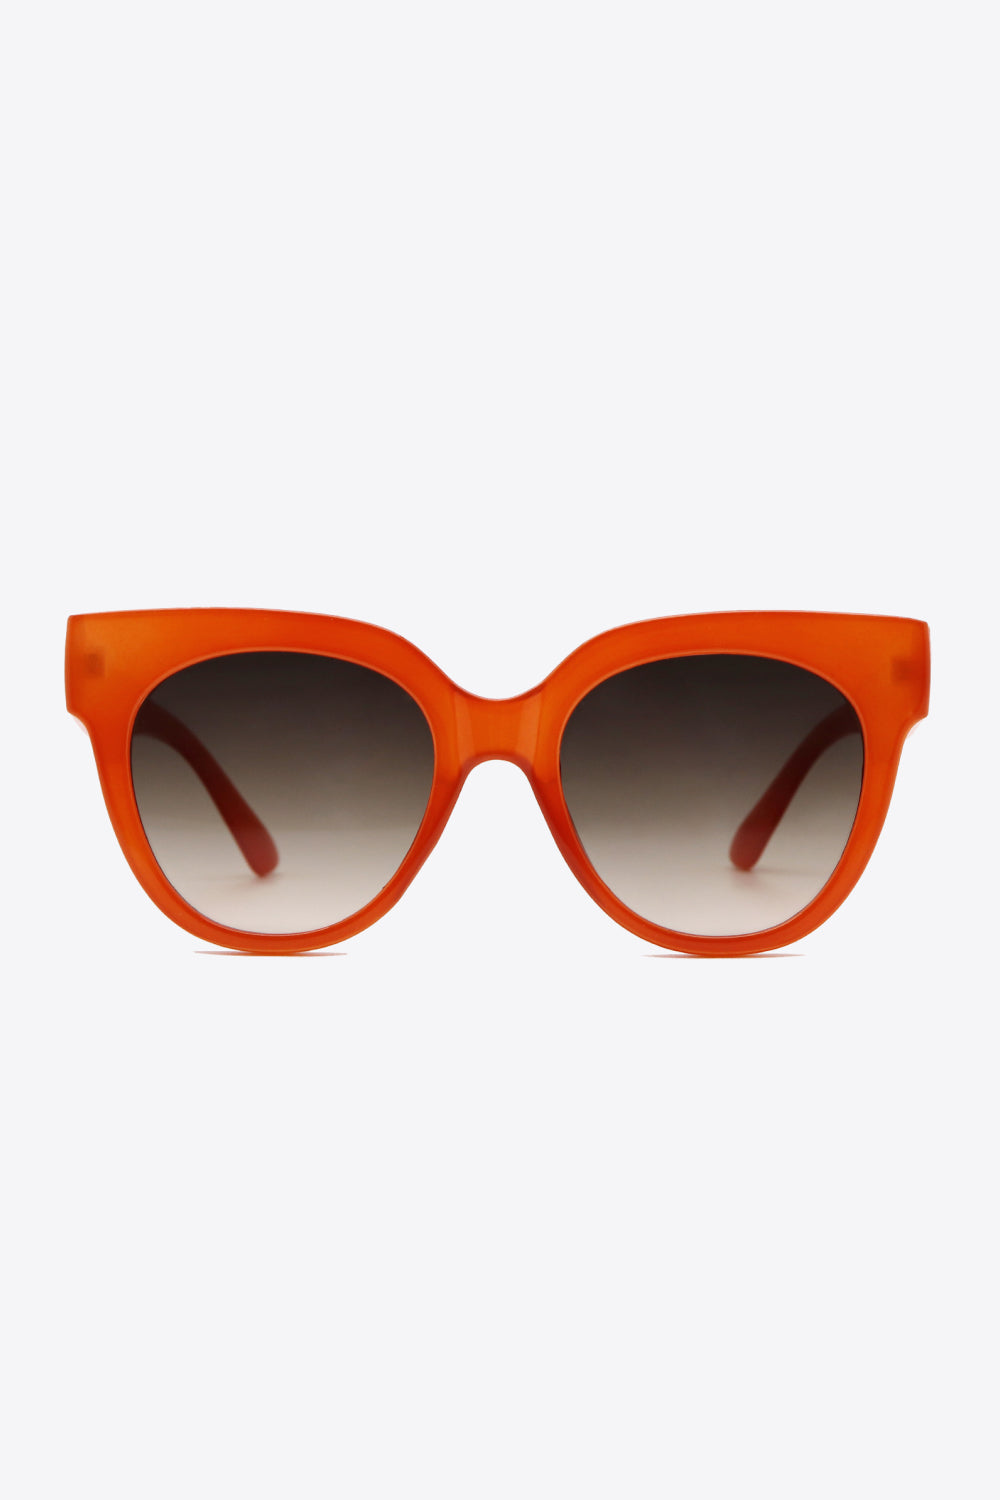 UV400 Polycarbonate Round Sunglasses - BEAUTY COSMOTICS SHOP